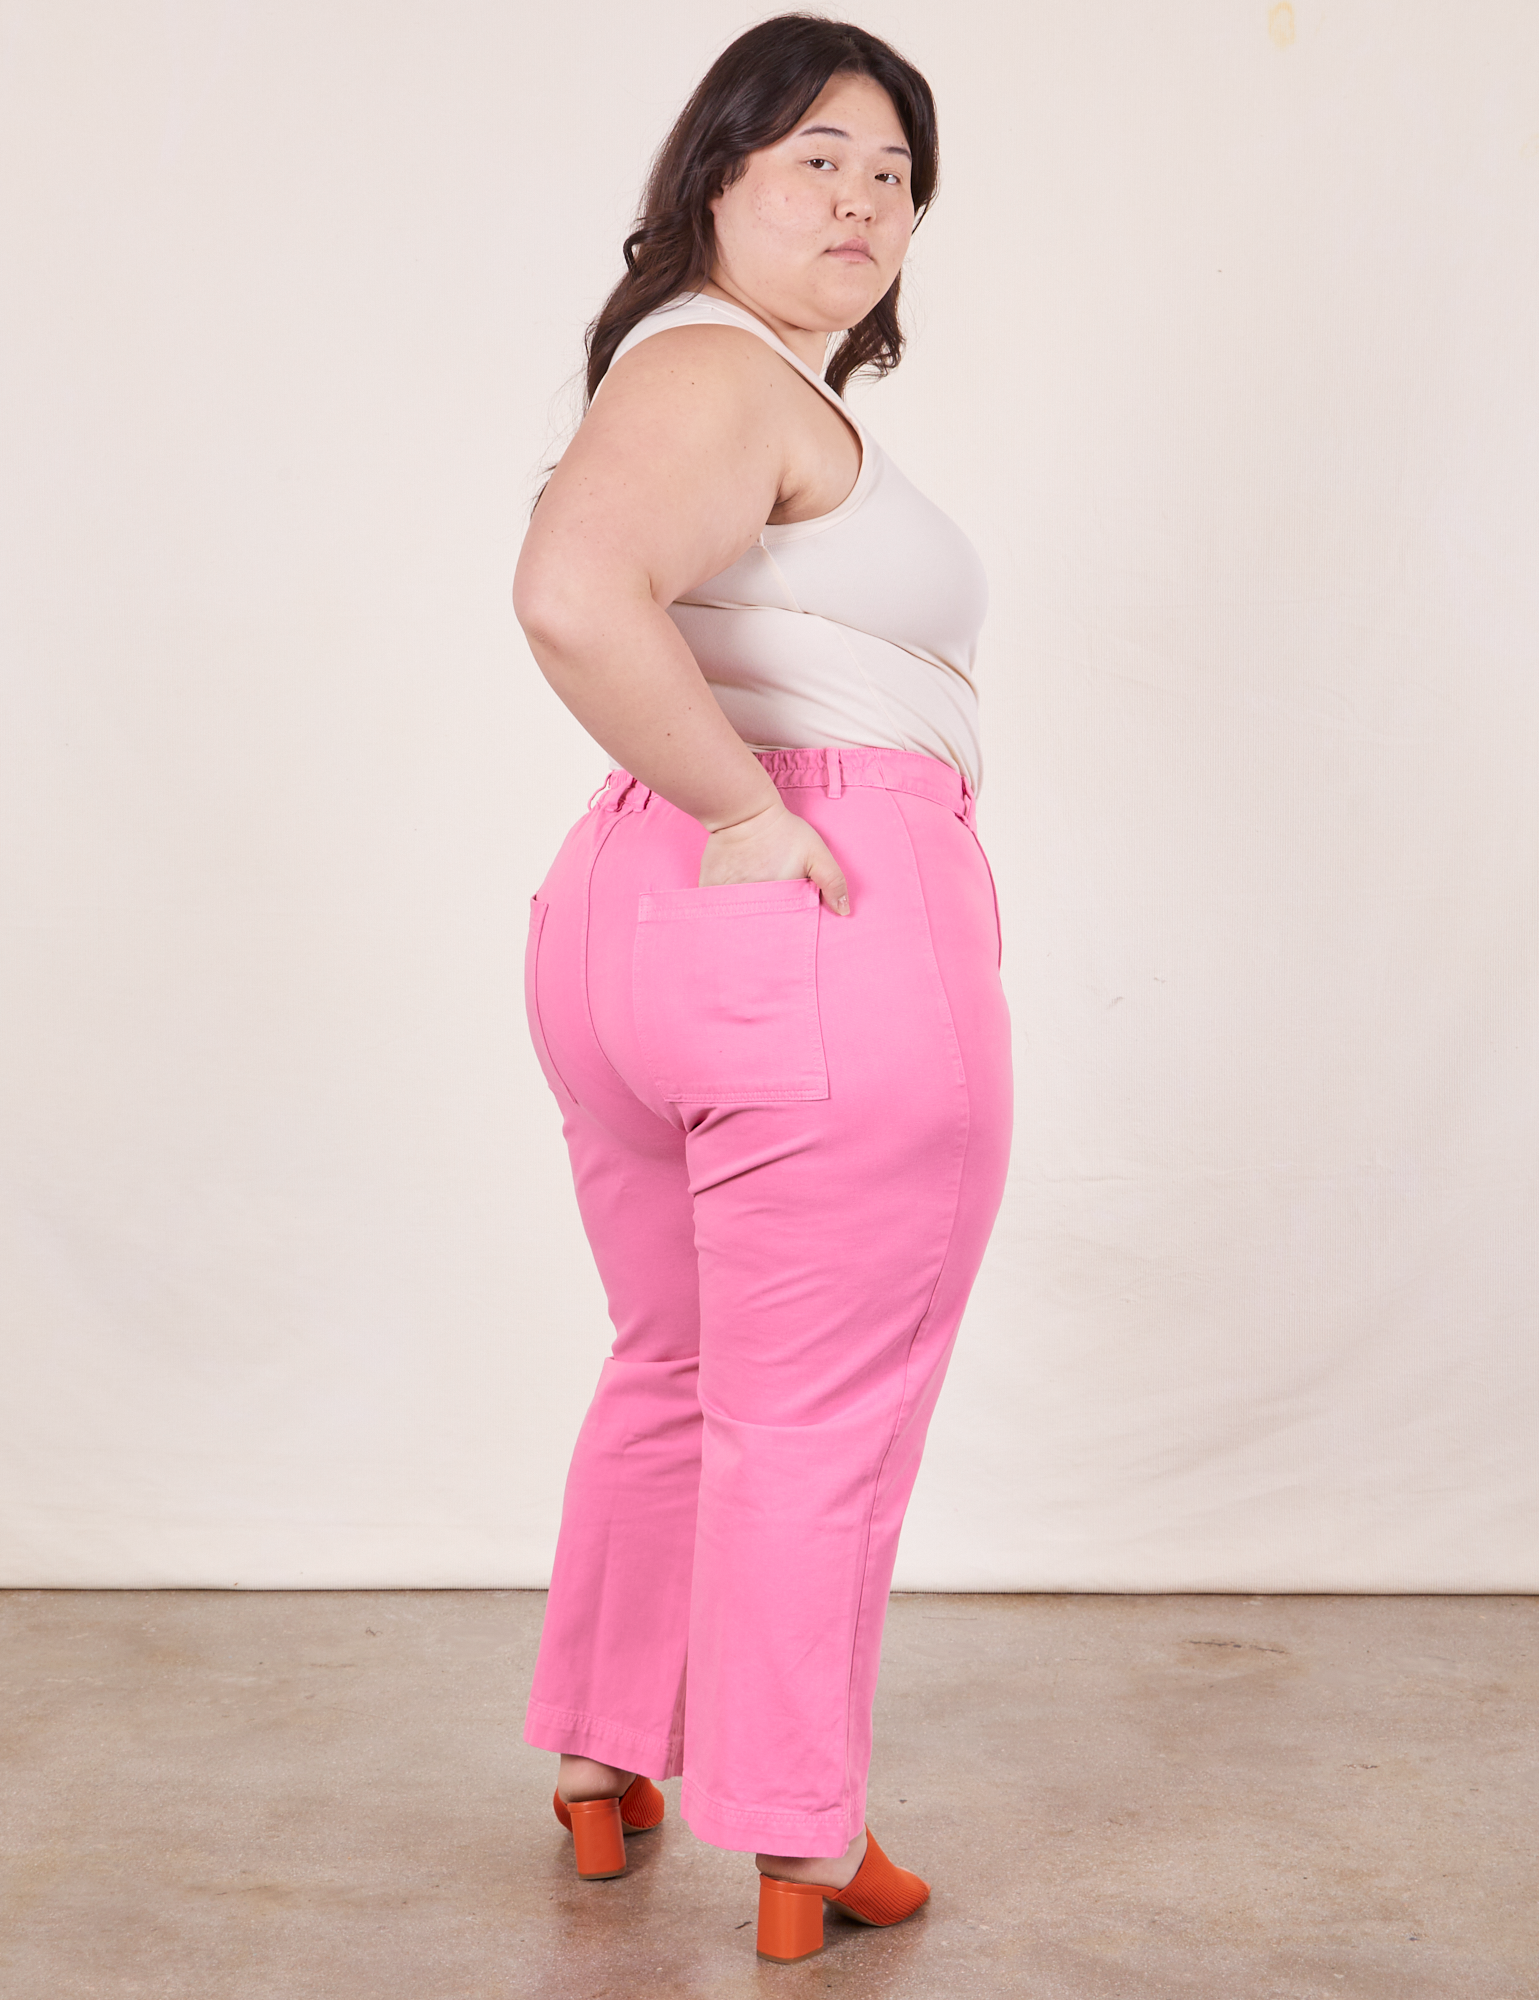 Western Pants in Bubblegum Pink back view on Ashley wearing Tank Top in vintage tee off-white